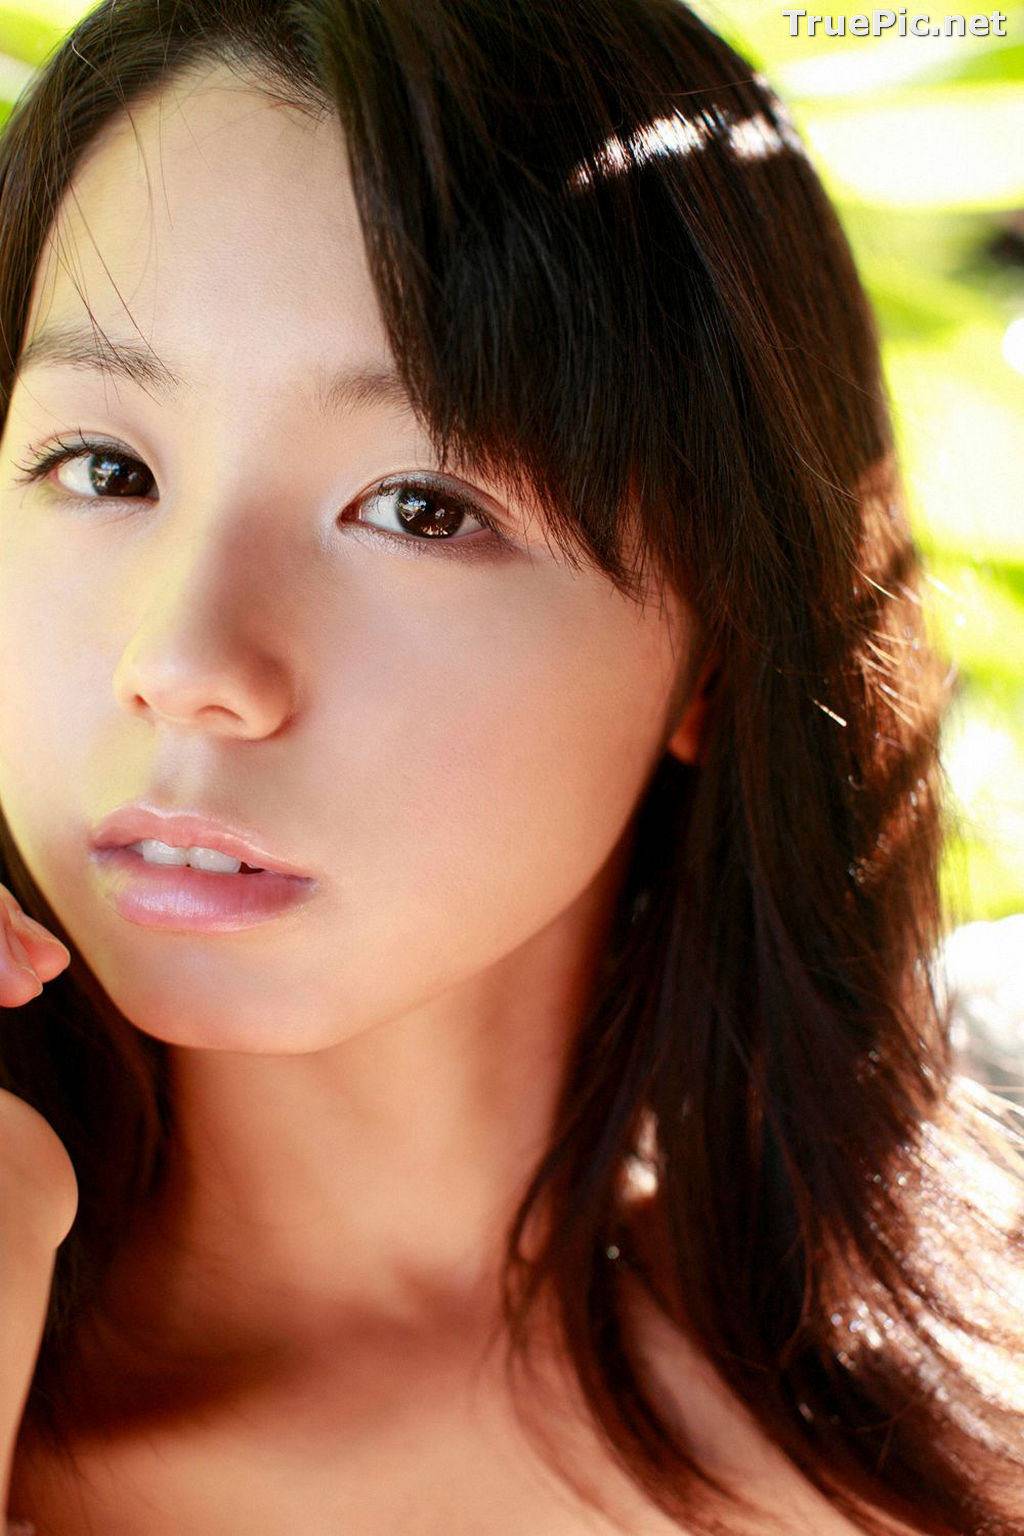 True Pic [ys Web] Vol 482 Japanese Actress Rina Koike Graduation